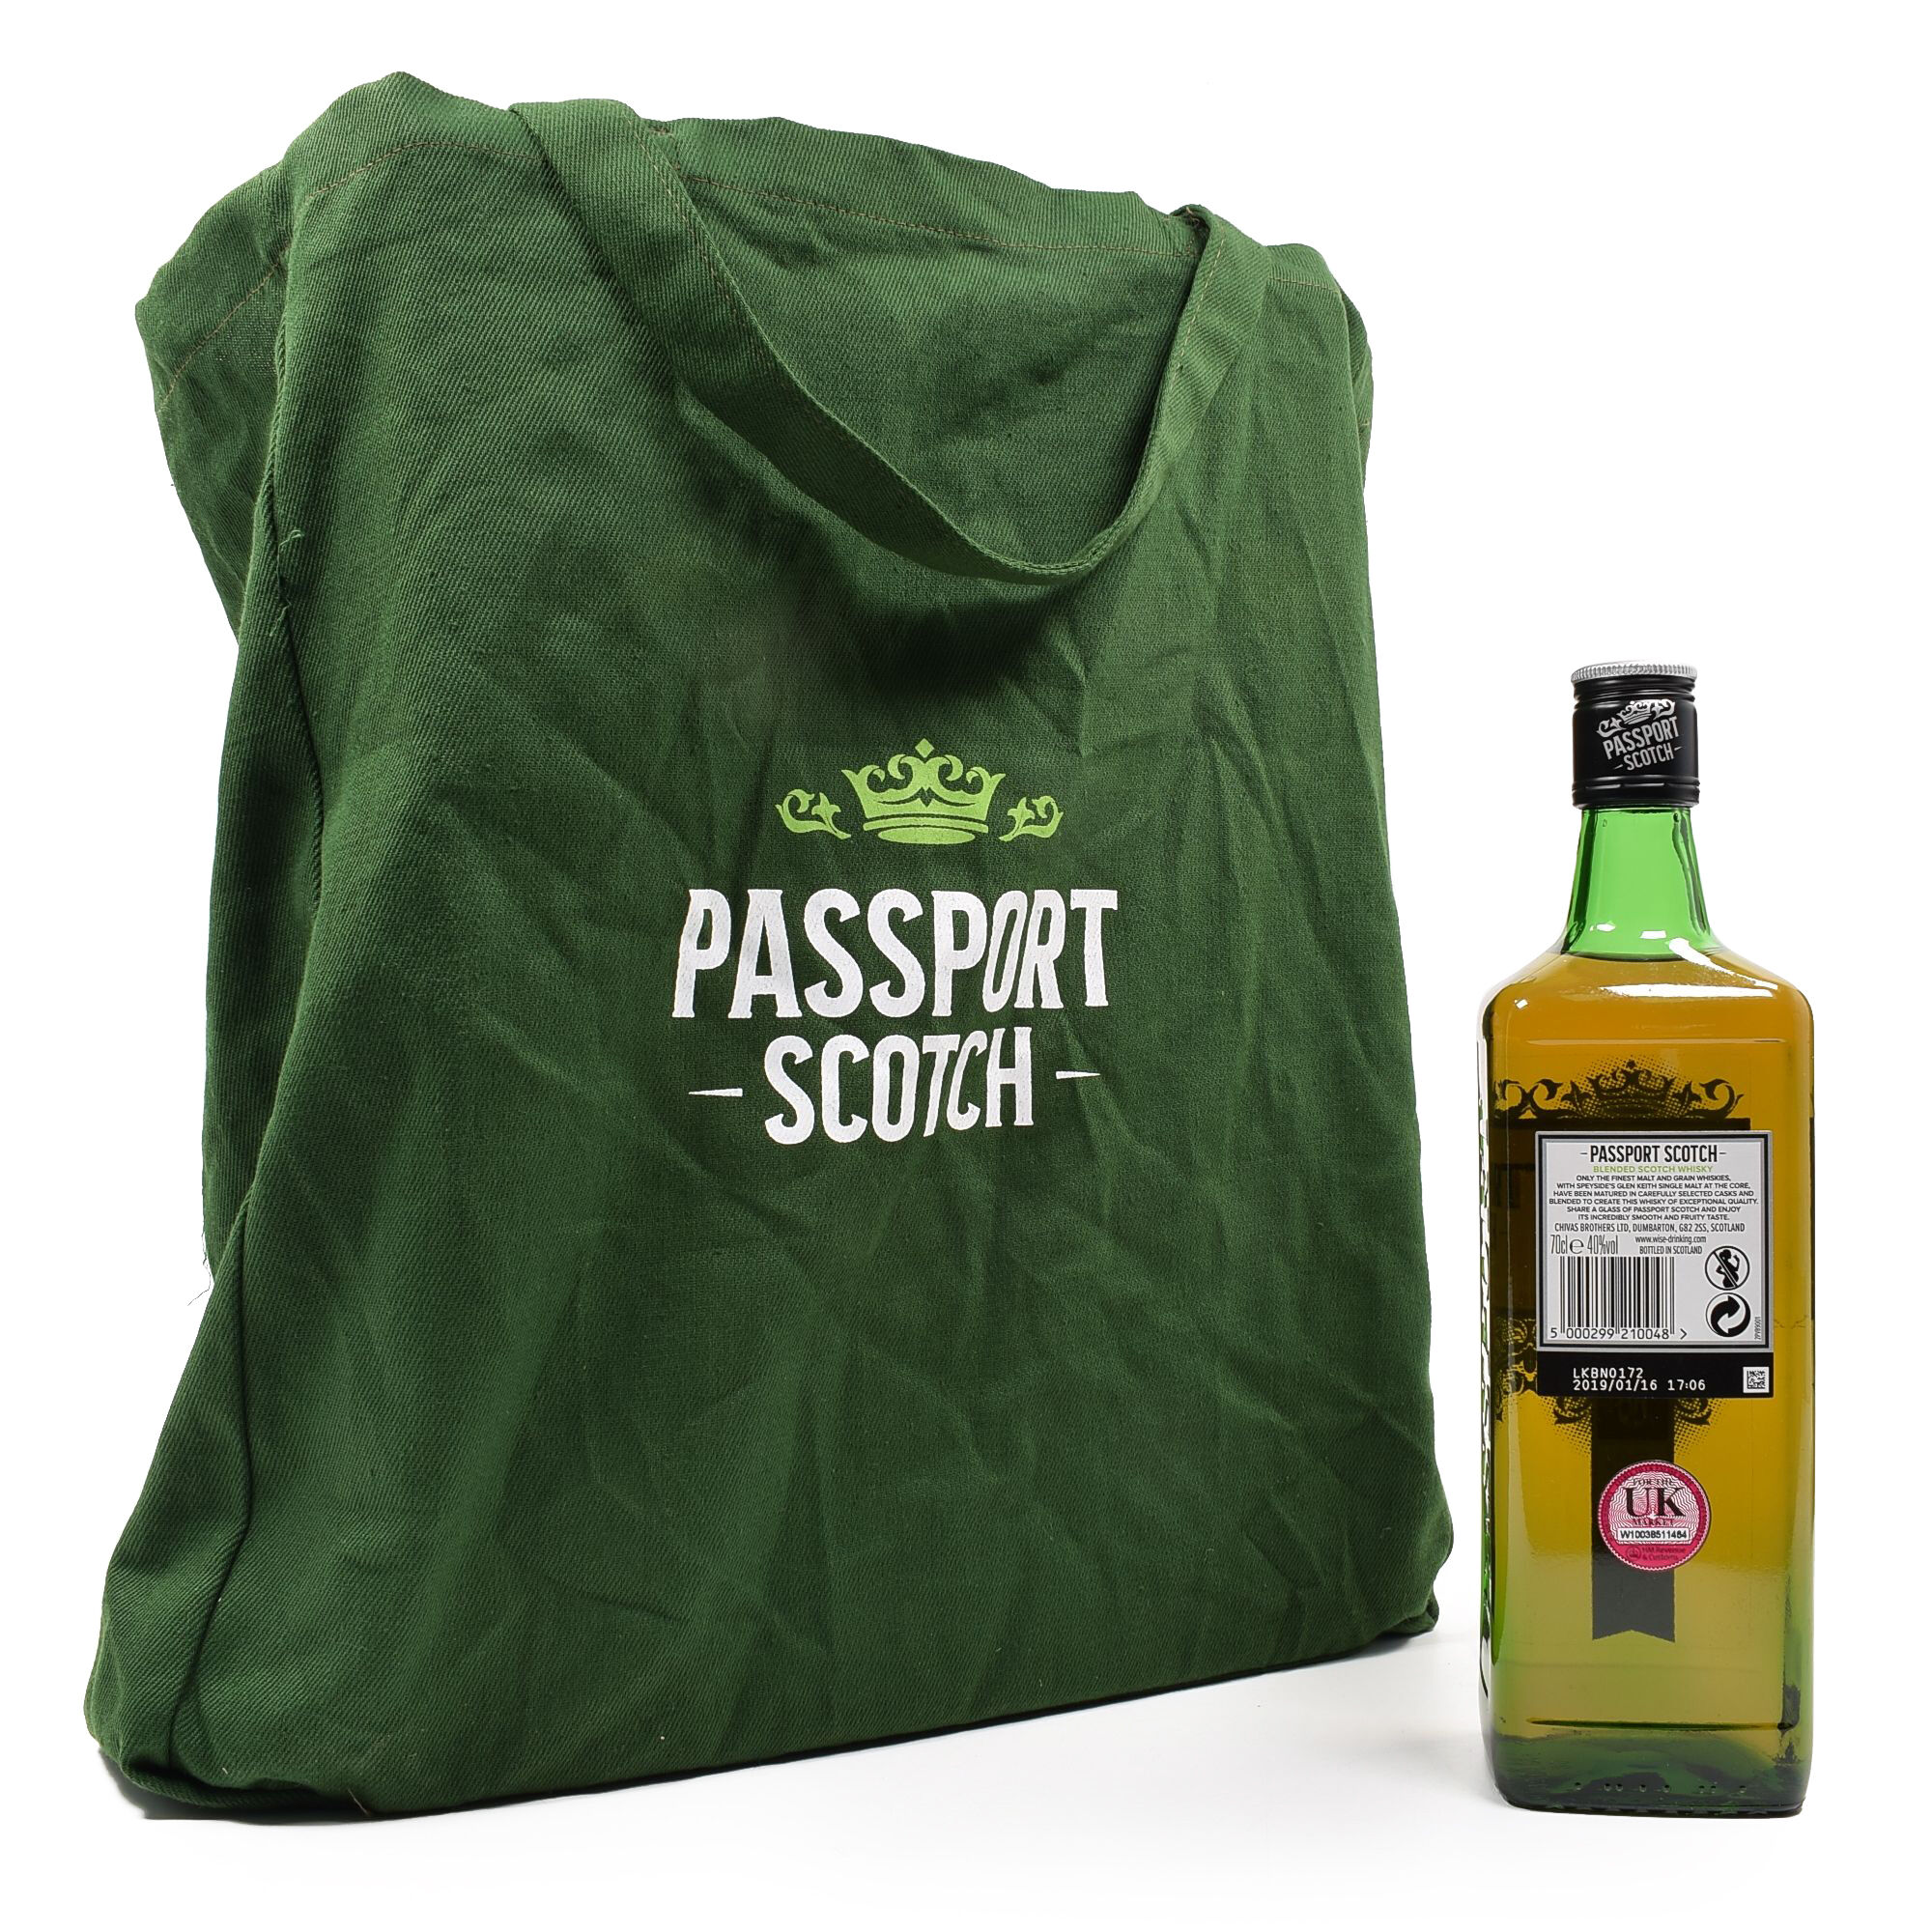 Award-Winning Blended Scotch Whisky - Passport Scotch